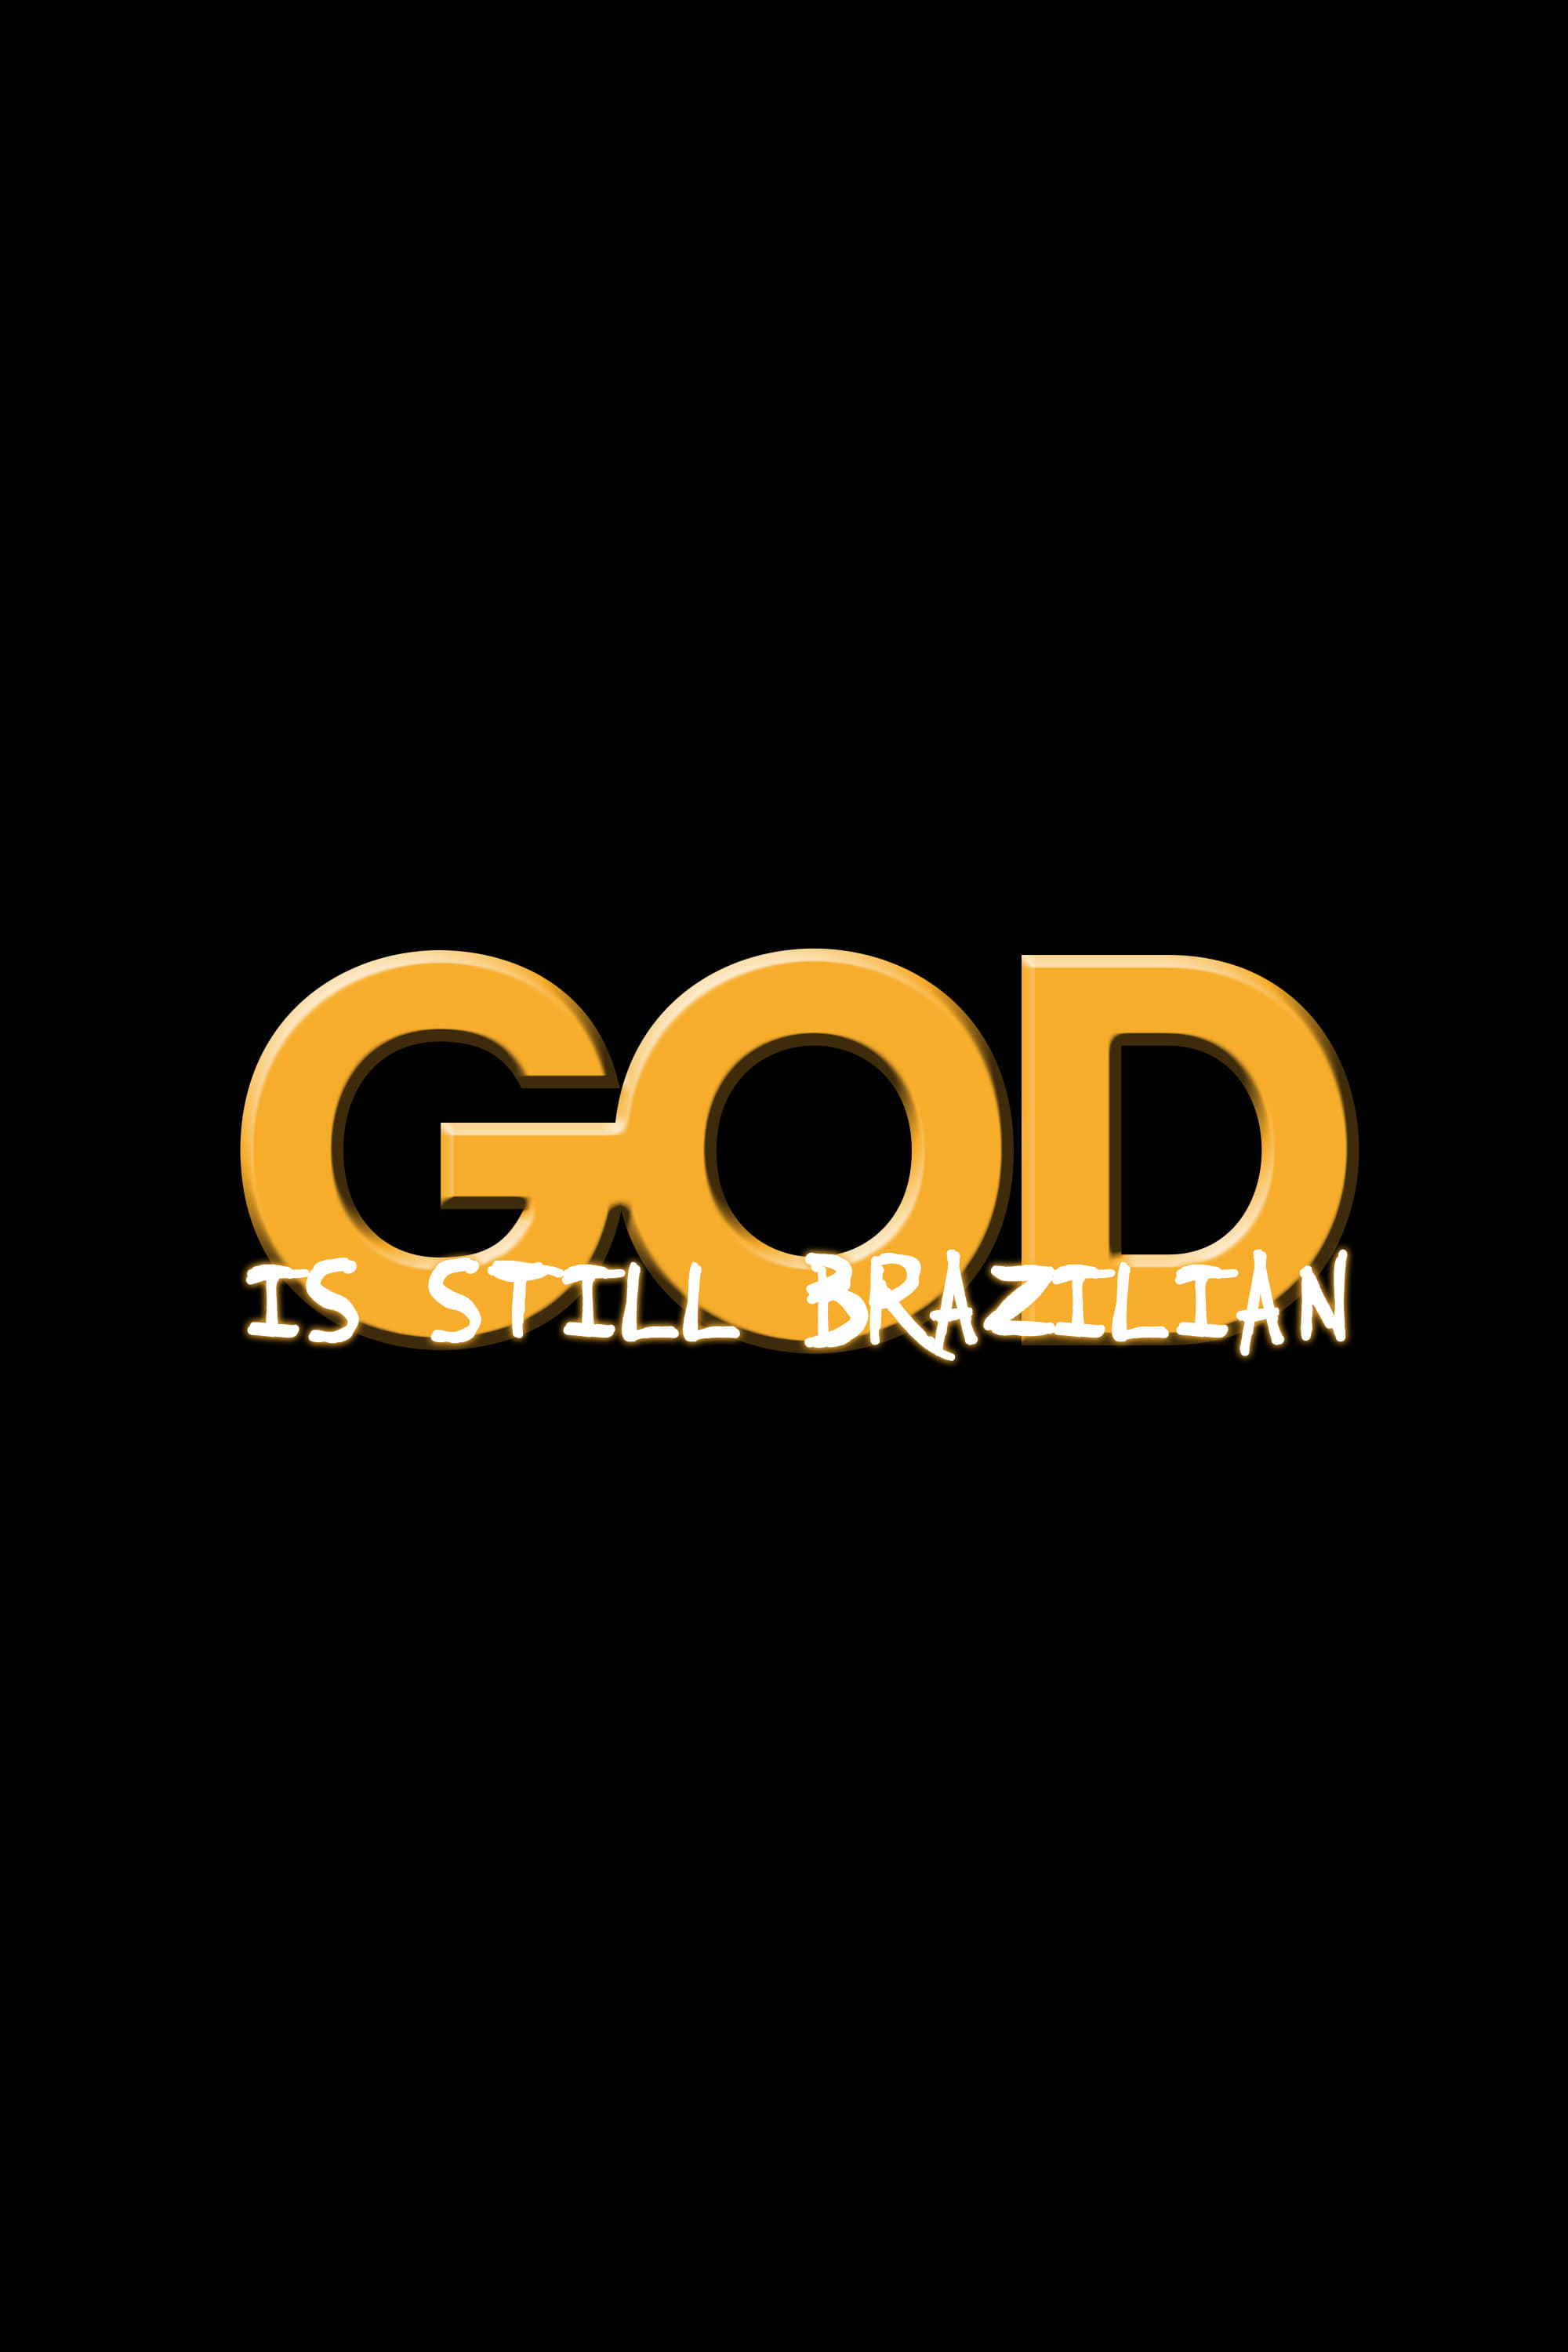 God Is Still Brazilian